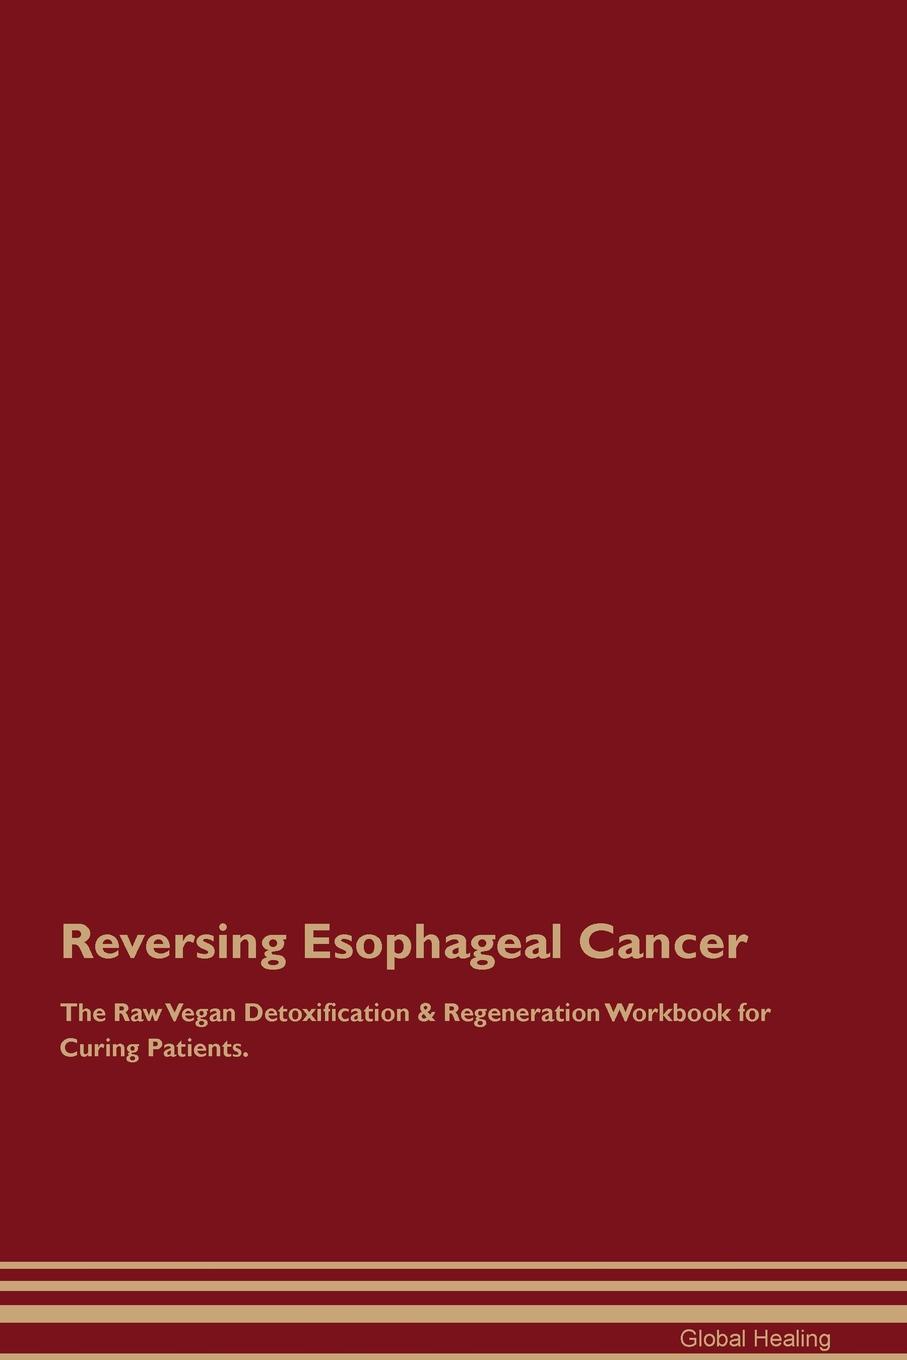 Reversing Esophageal Cancer The Raw Vegan Detoxification & Regeneration Workbook for Curing Patients